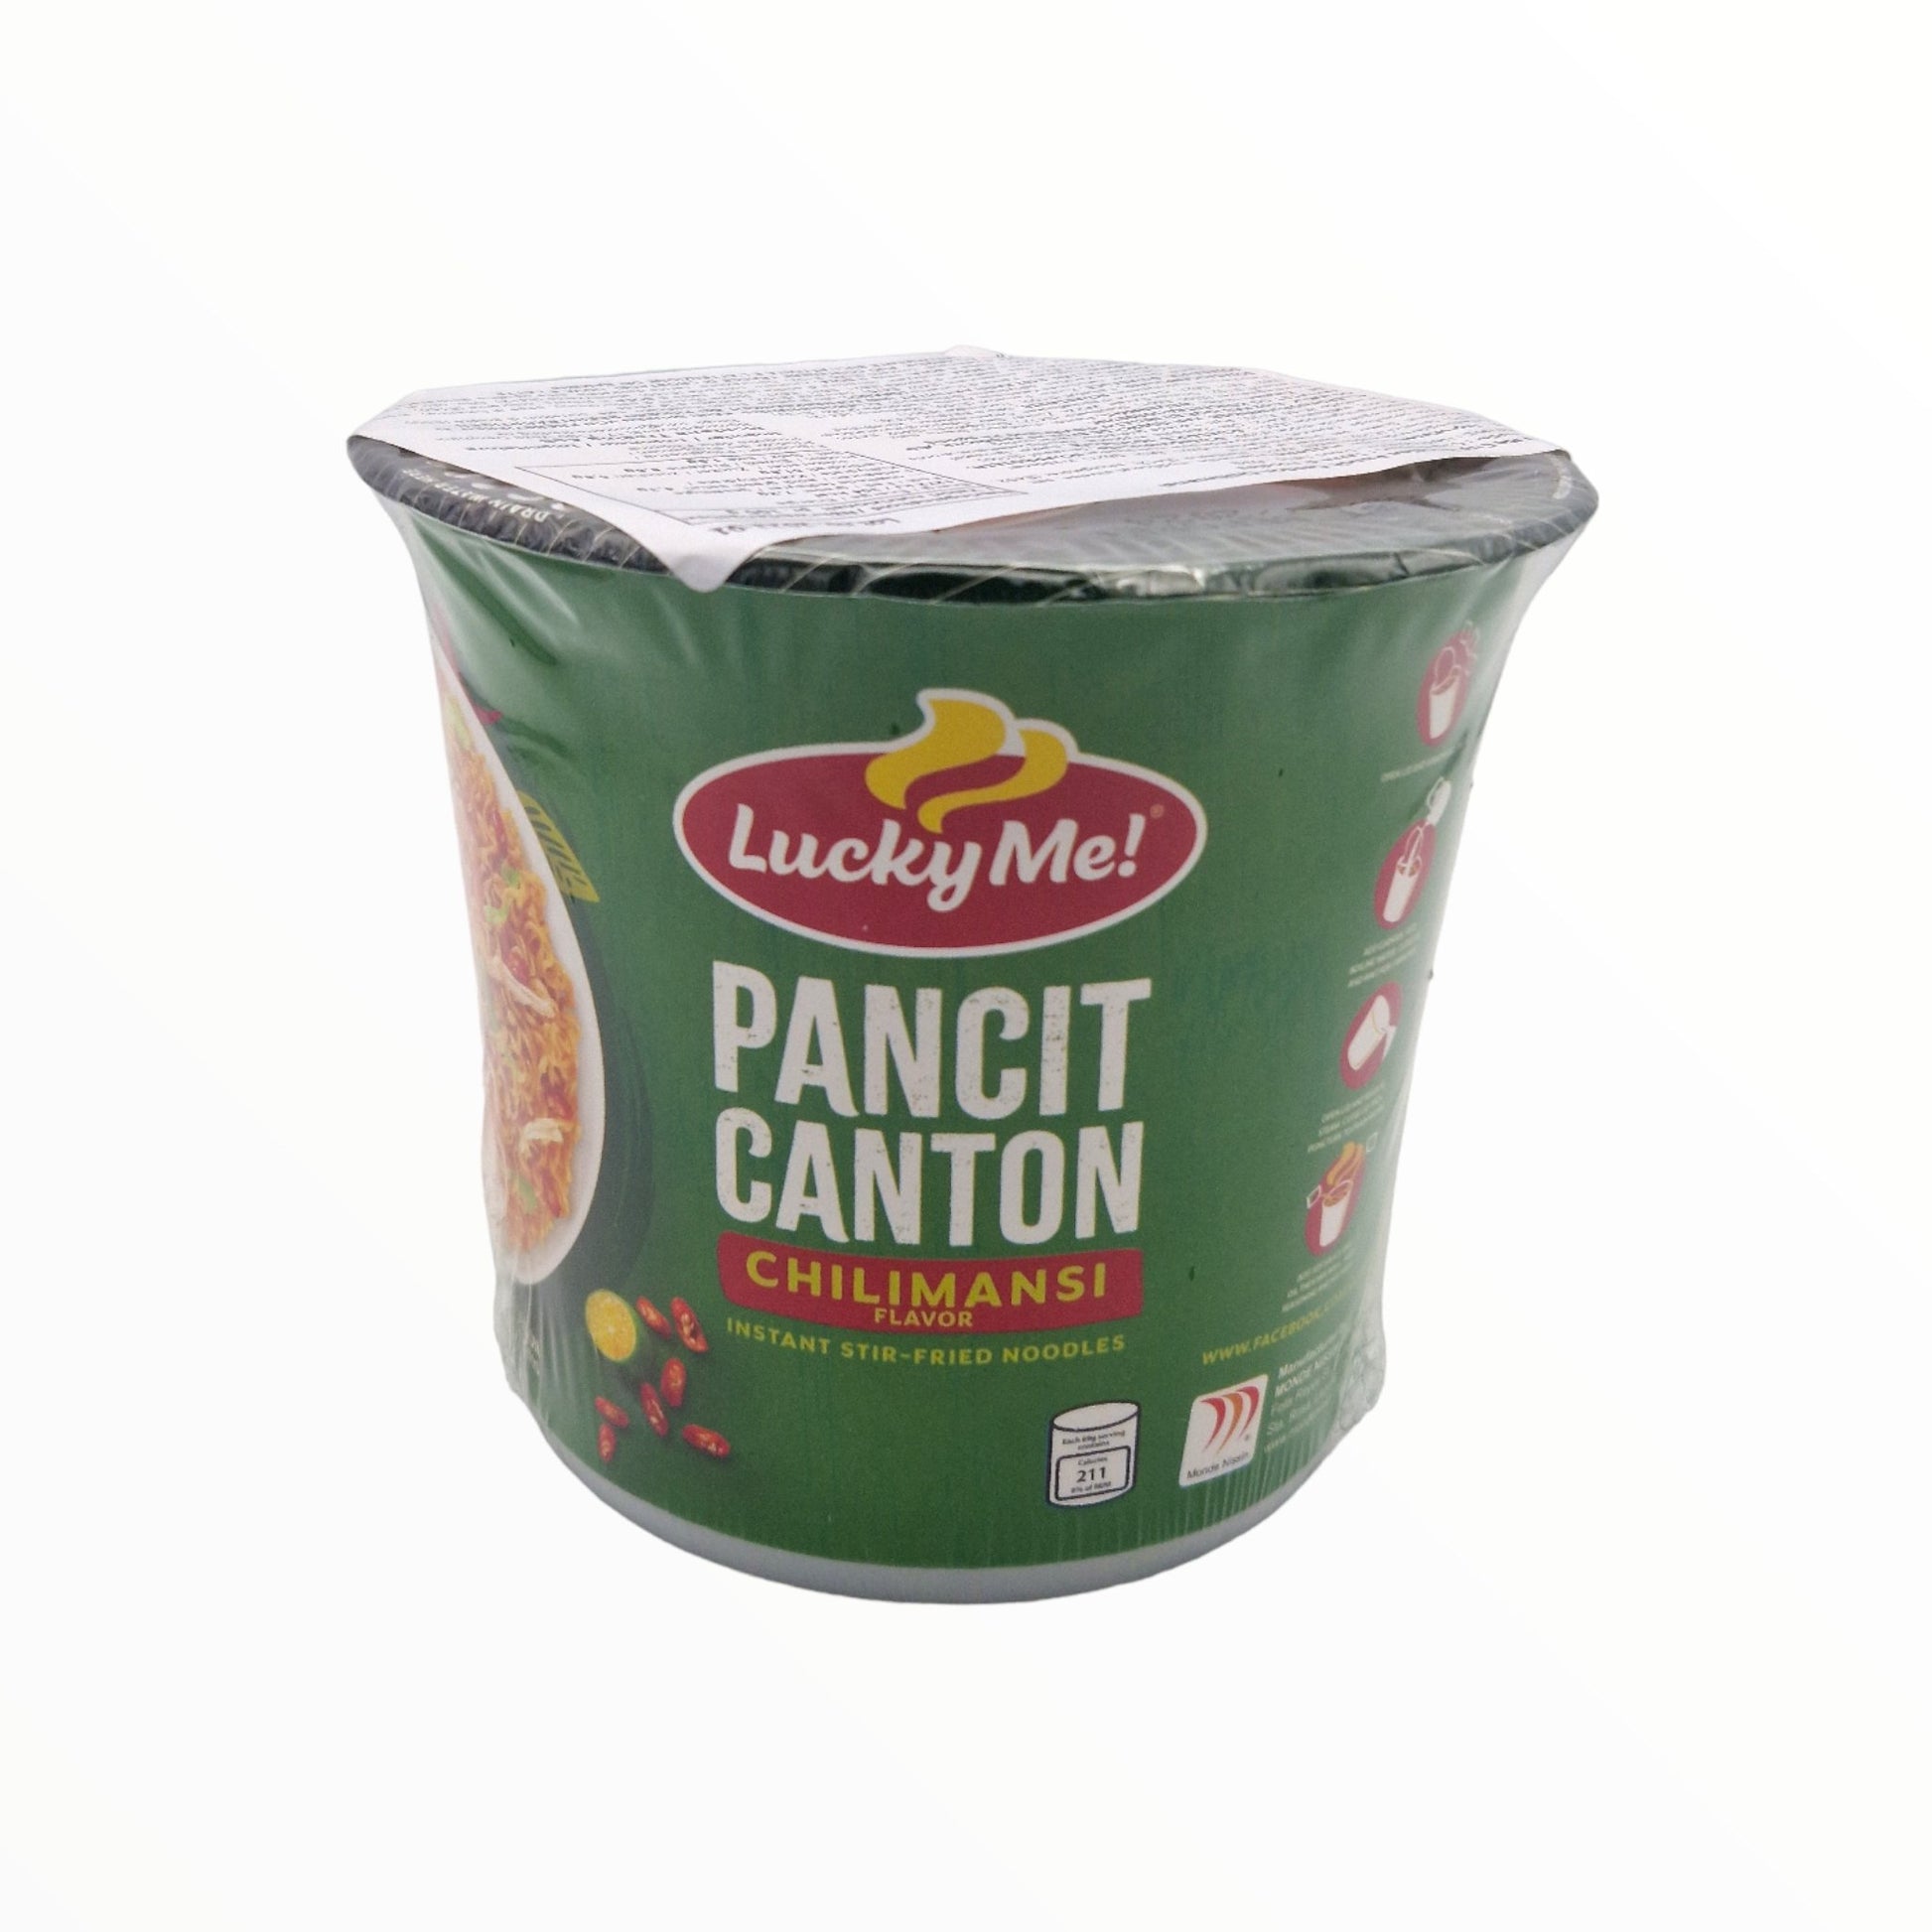 Pancit Canton Chilimansi Cup Nudeln 69g - Mabuhay Pinoy Asia Shop